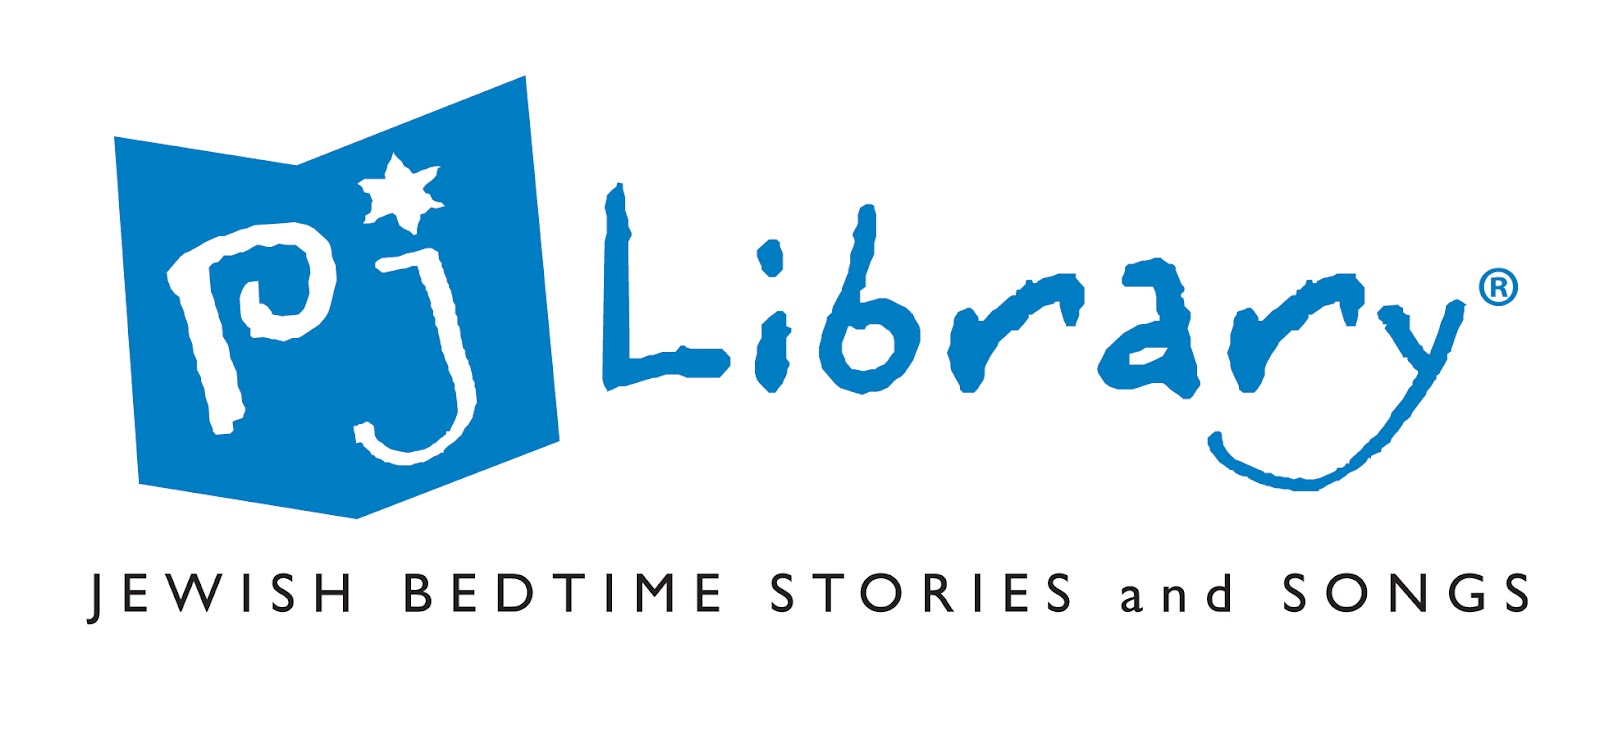 Logo-PJ-Library-Tagline.jpg